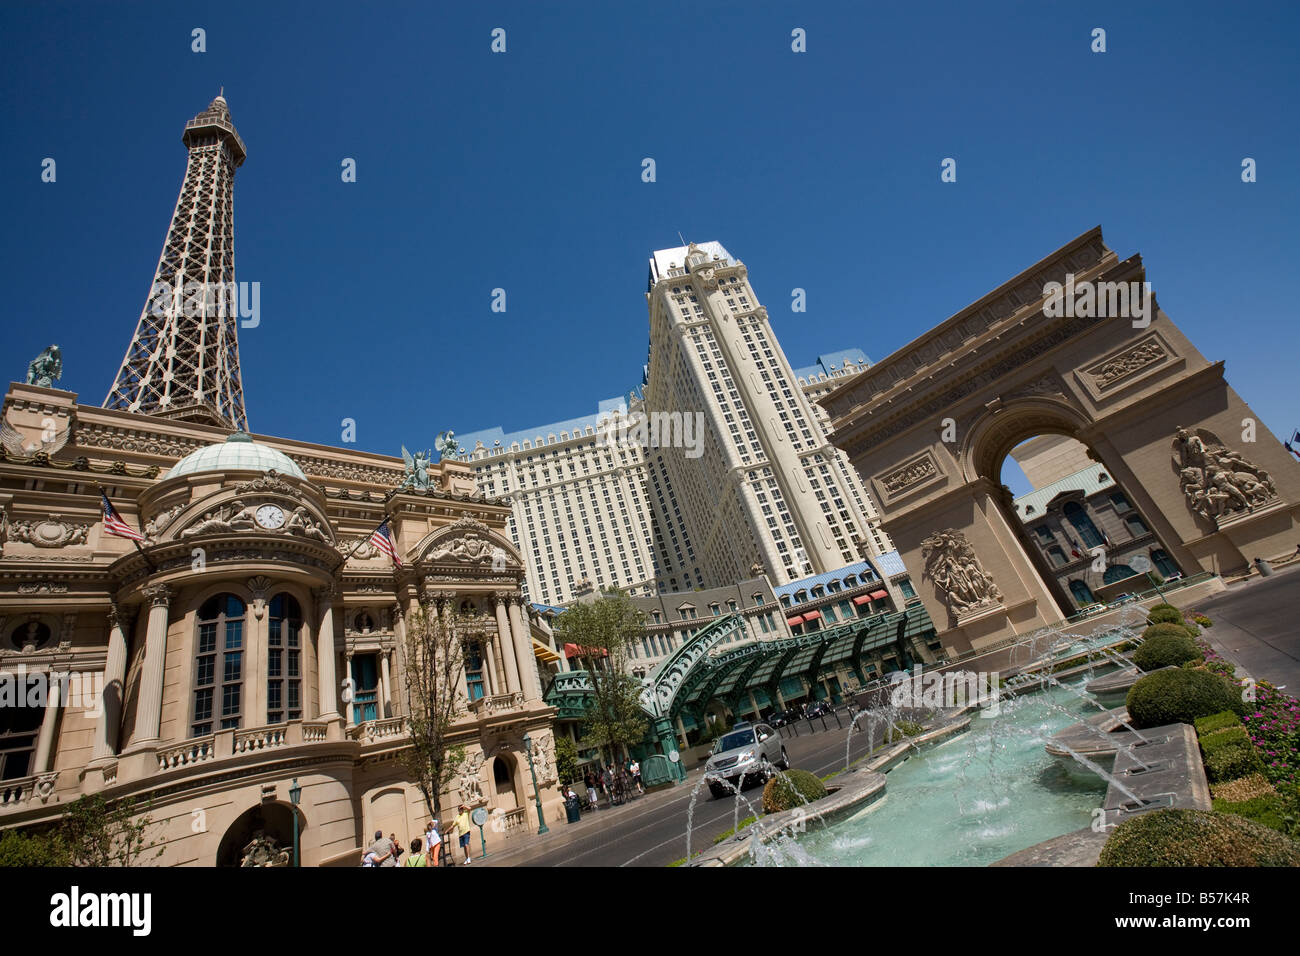 Parigi Hotel e Casino di Las Vegas, Nevada, STATI UNITI D'AMERICA Foto Stock